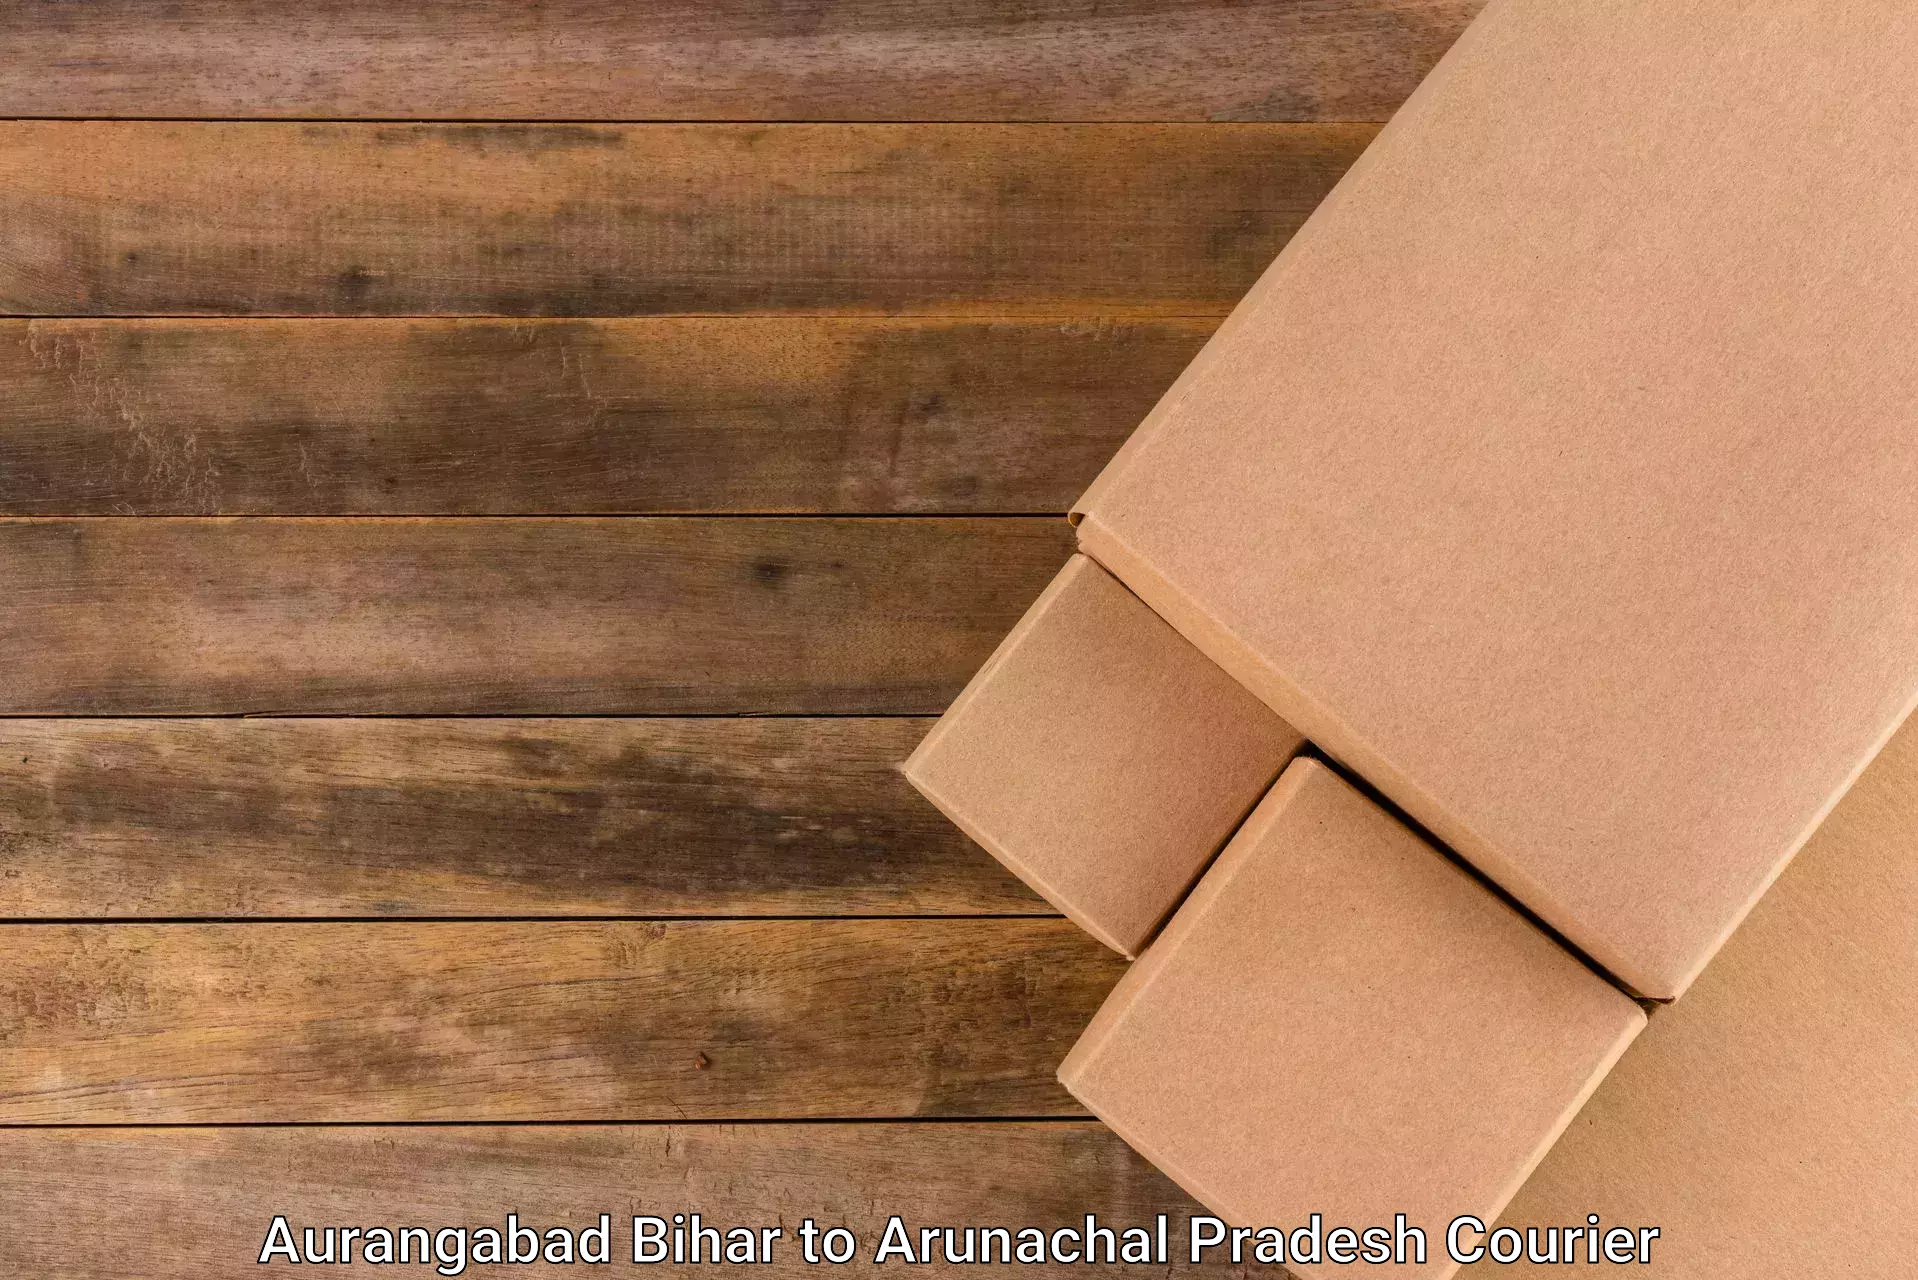 Postal and courier services Aurangabad Bihar to Nirjuli